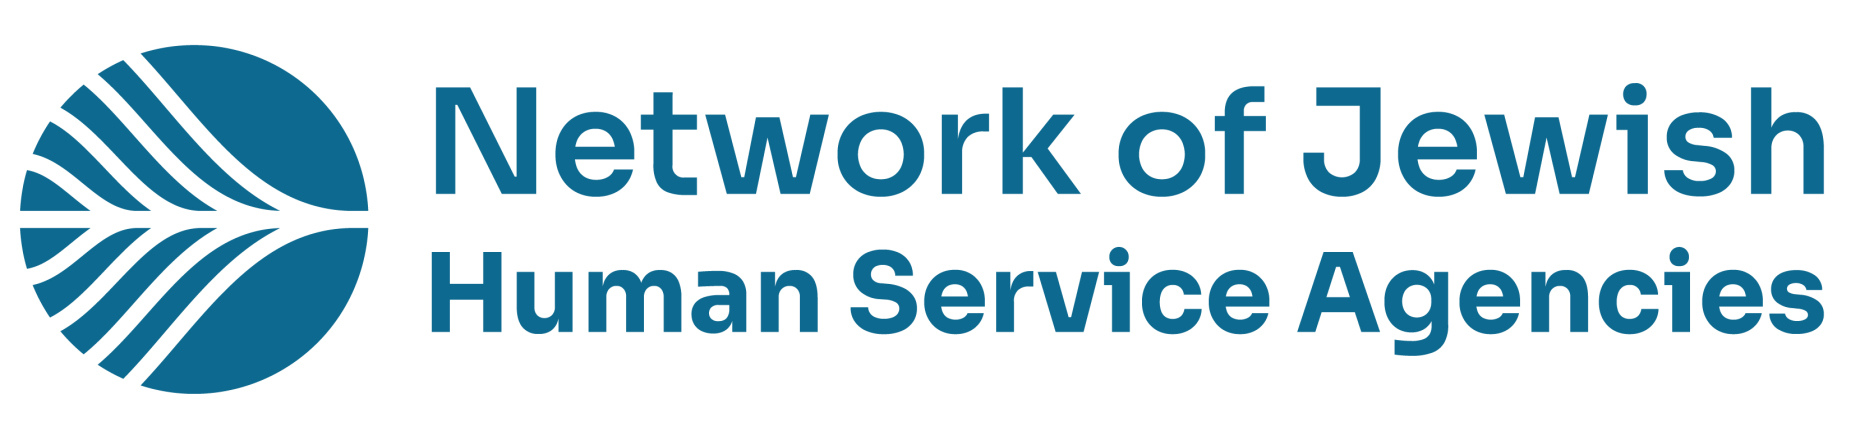 Network of Jewish Human Service Agencies.png